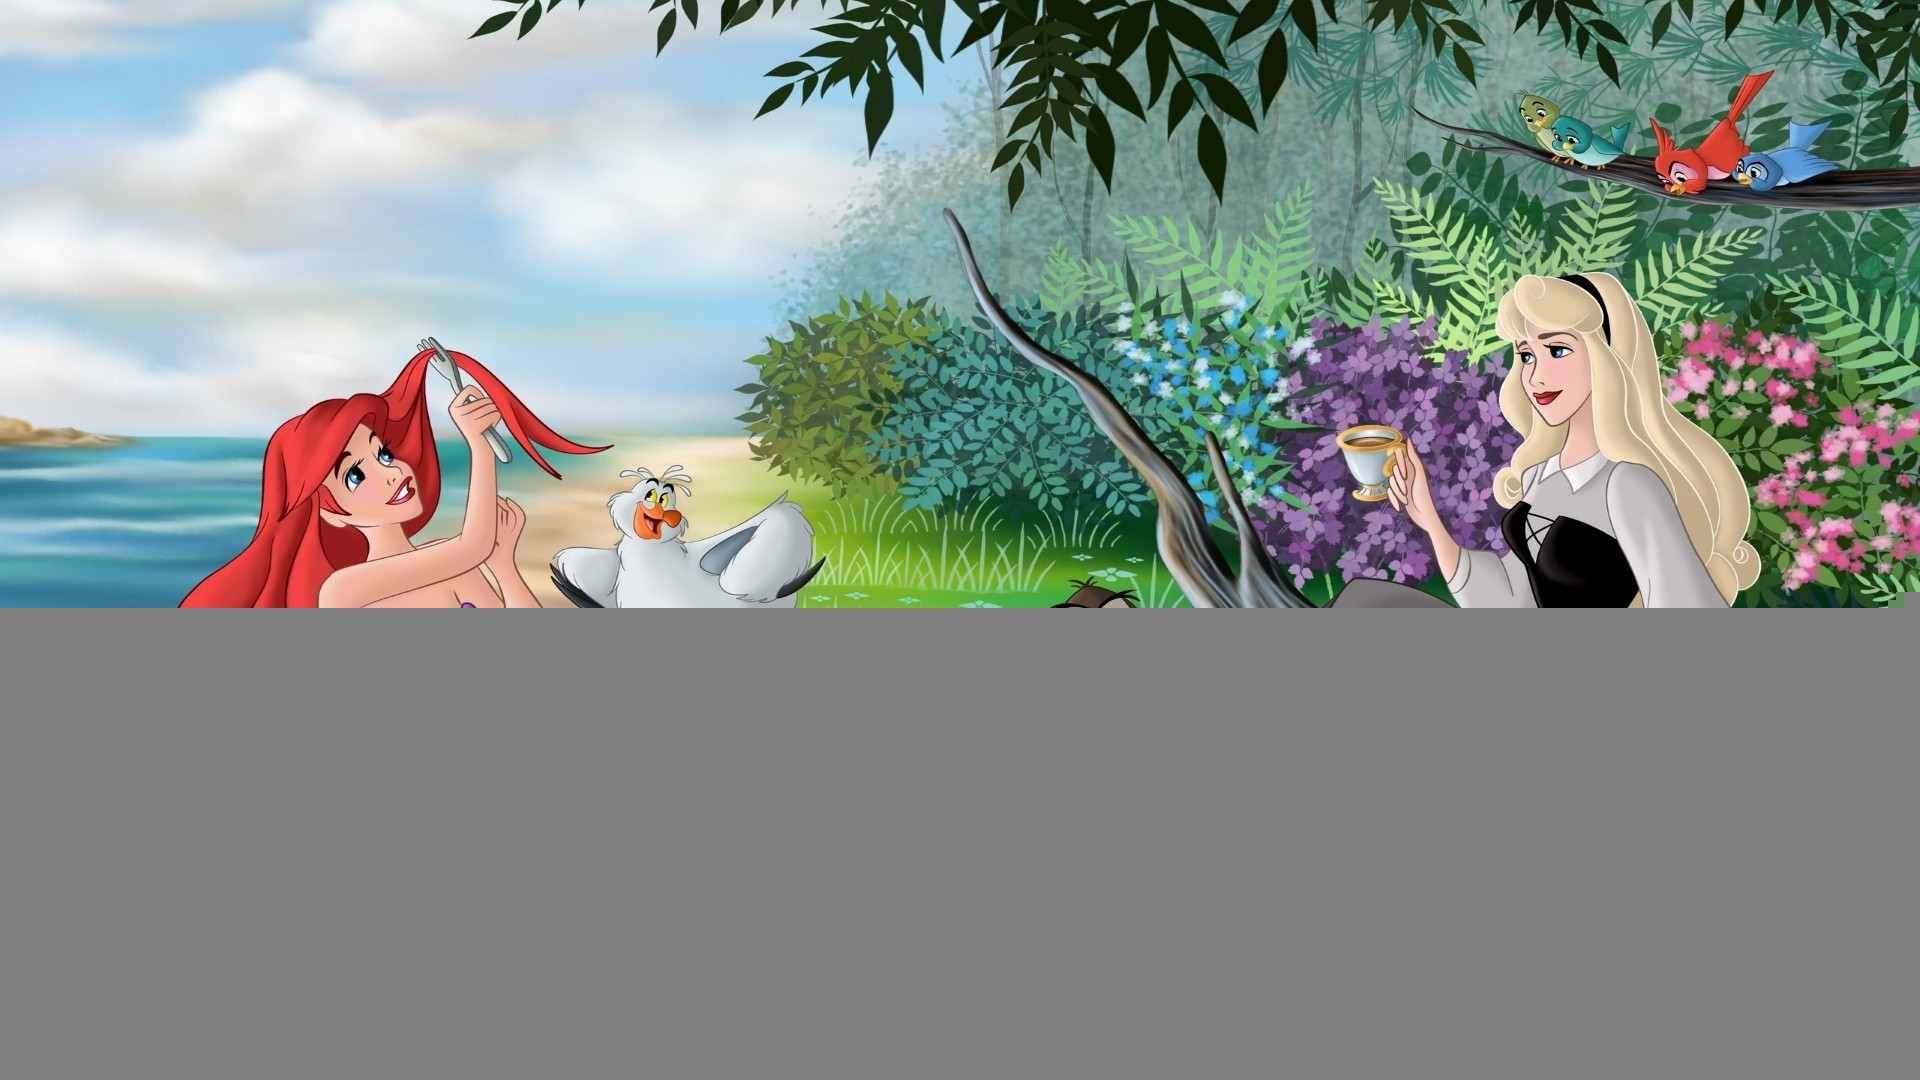 1920x1080 Sleeping Beauty Wallpapers - Wallpaper Cave Sleeping Beauty Desktop  Wallpaper | Disney's World of Wonders ...